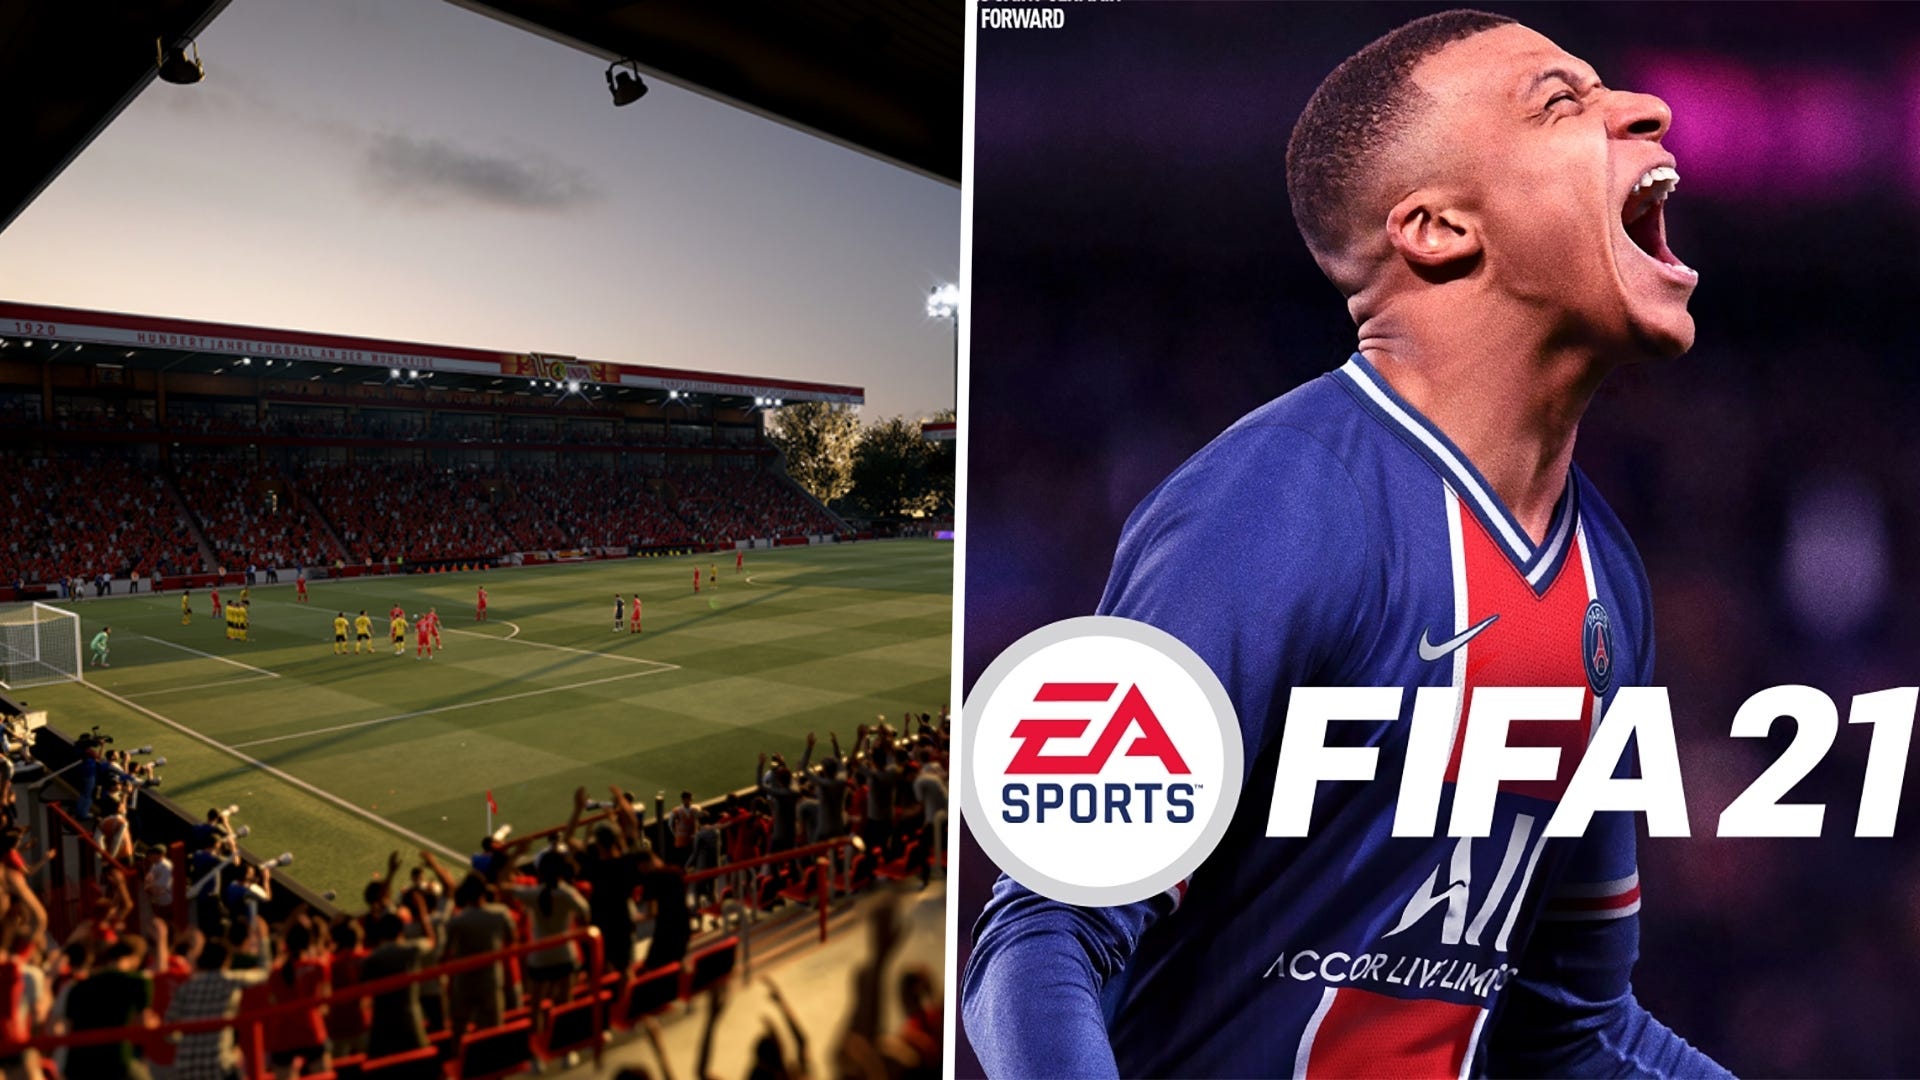 FIFA 21: confira todas as ligas do jogo, fifa